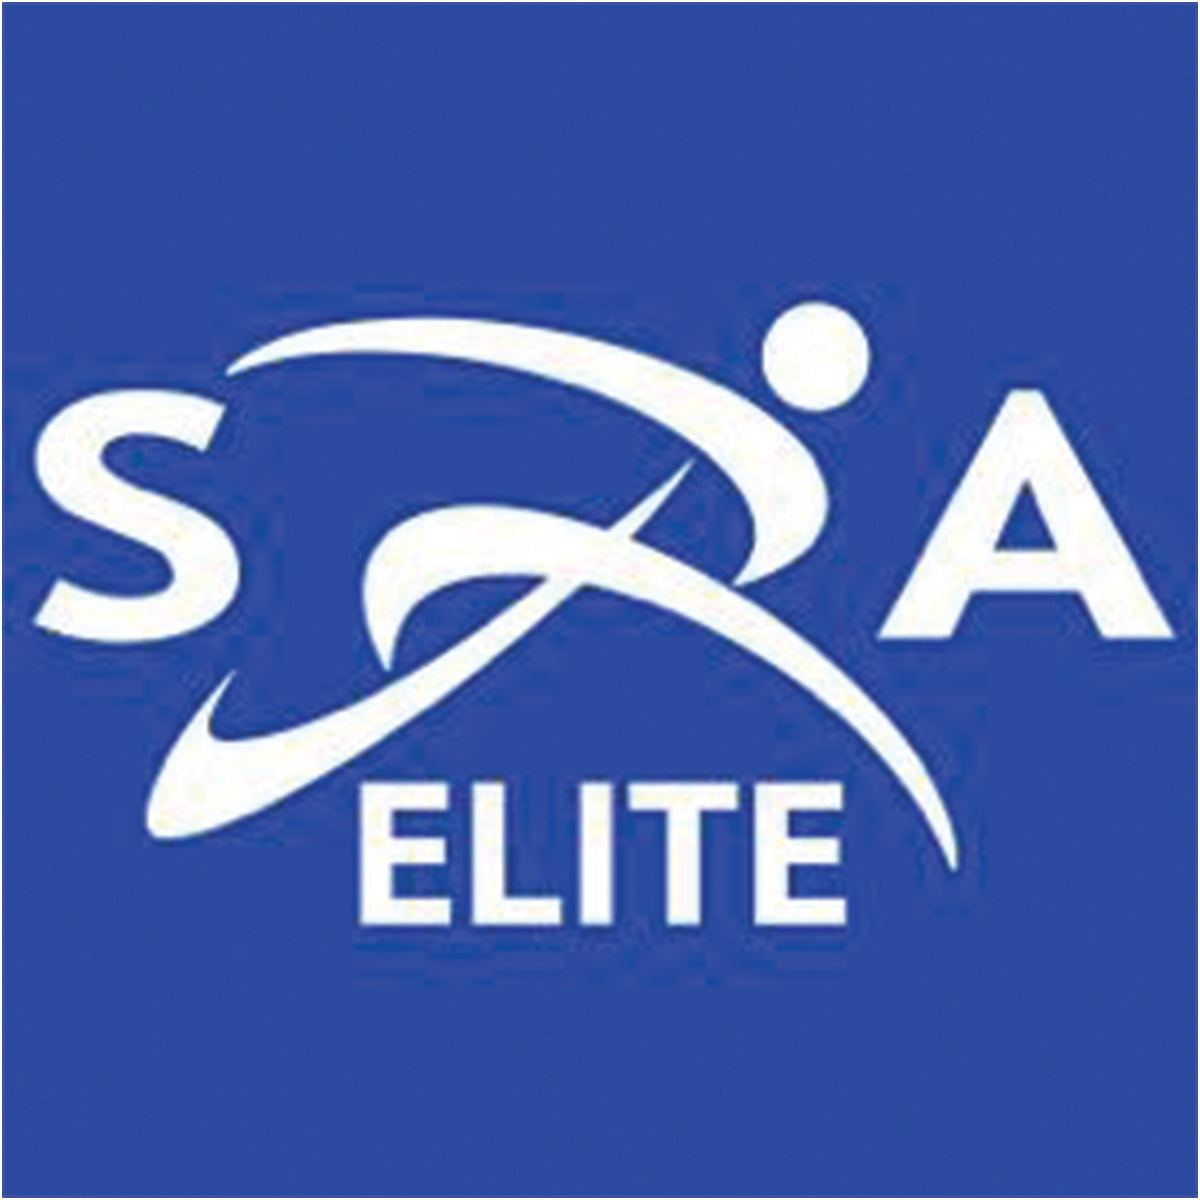 SRA Elite